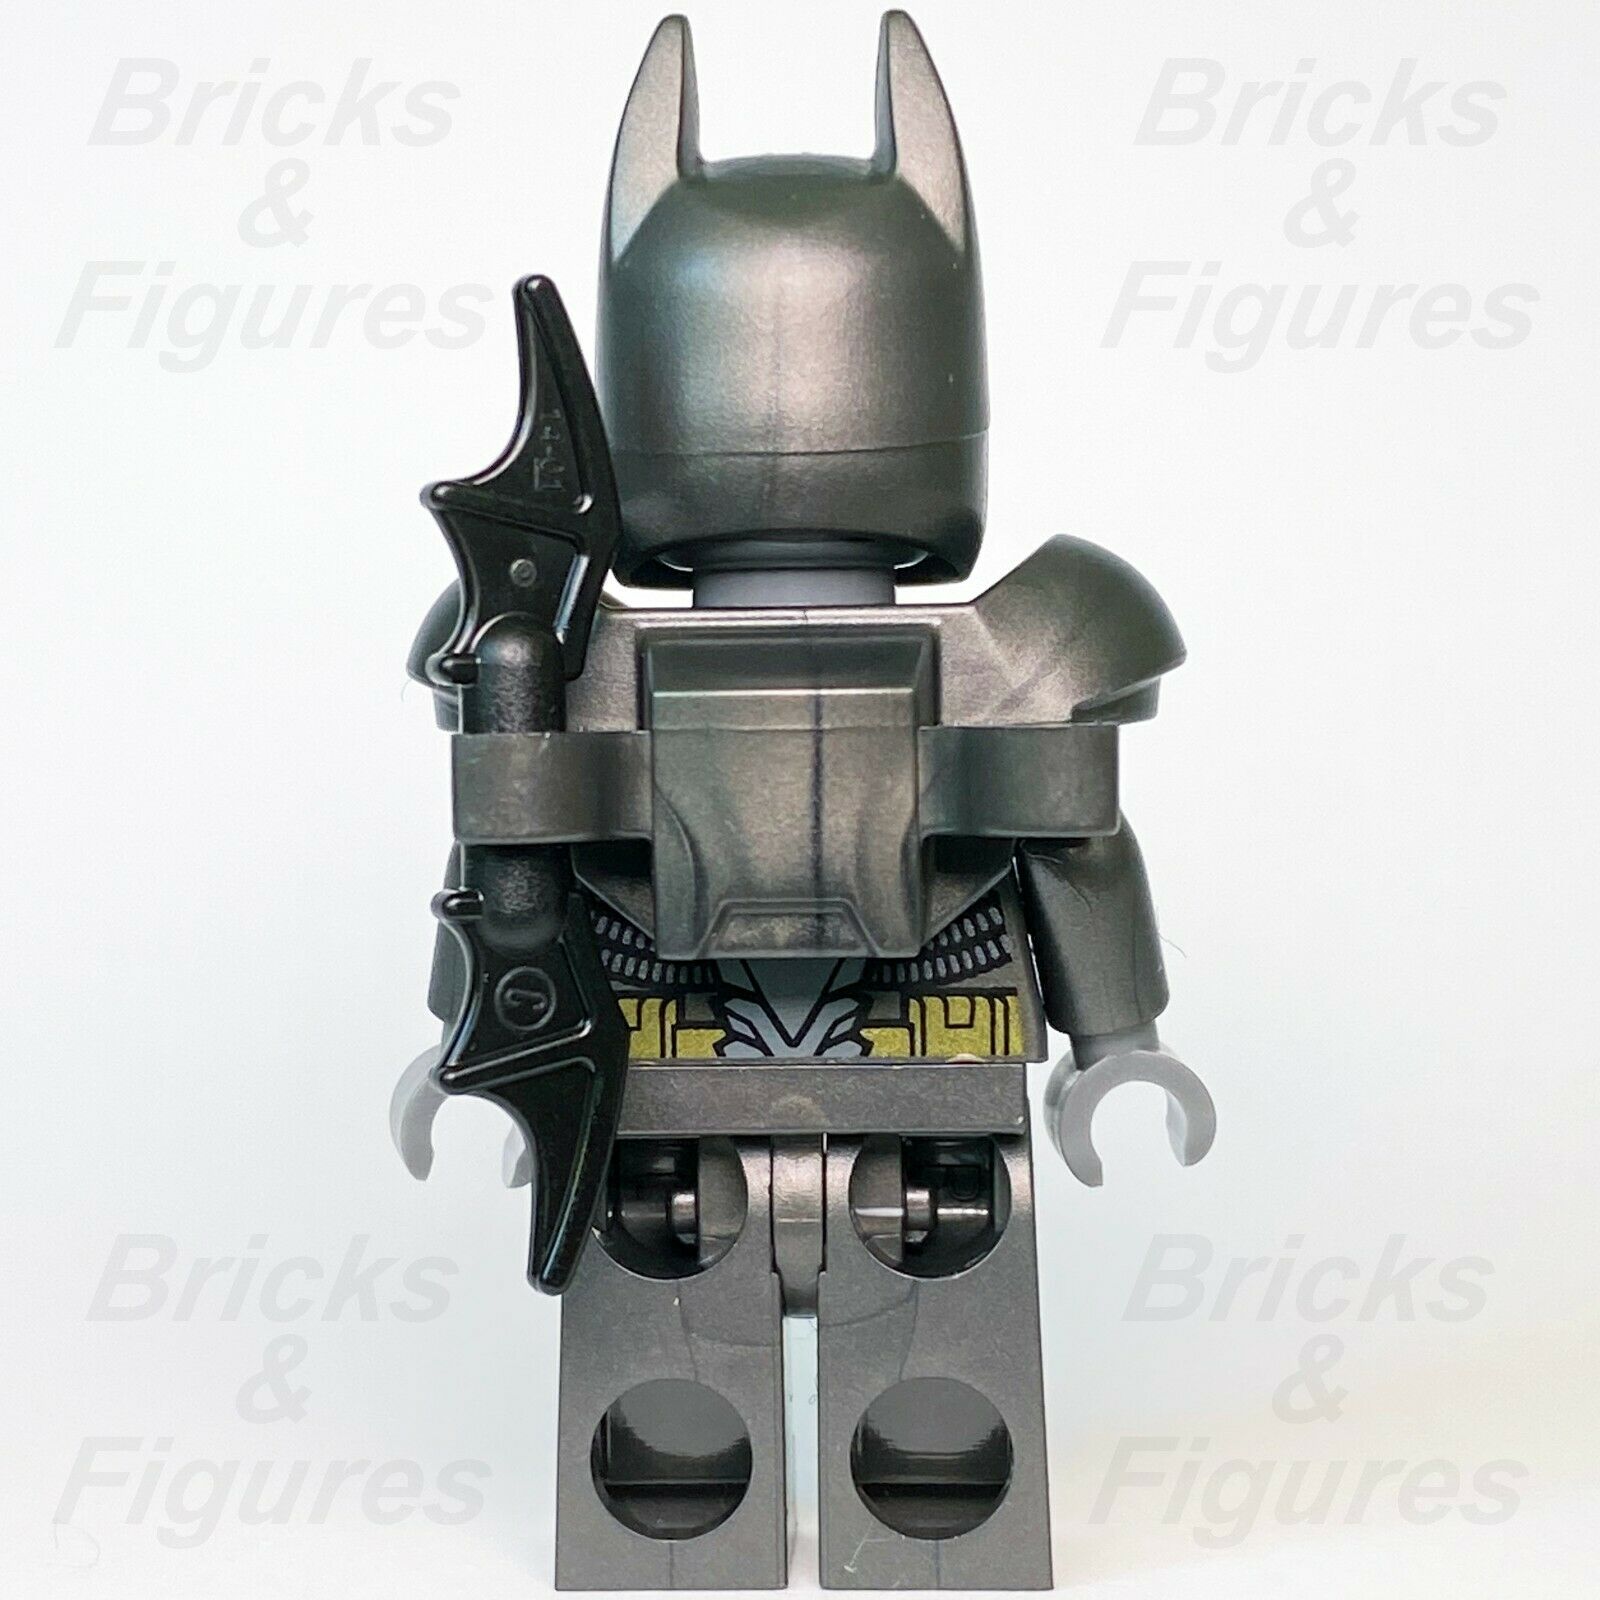 DC Super Heroes LEGO Batman 2 Heavy Armor Justice League Minifigure from set 76110 - Bricks & Figures